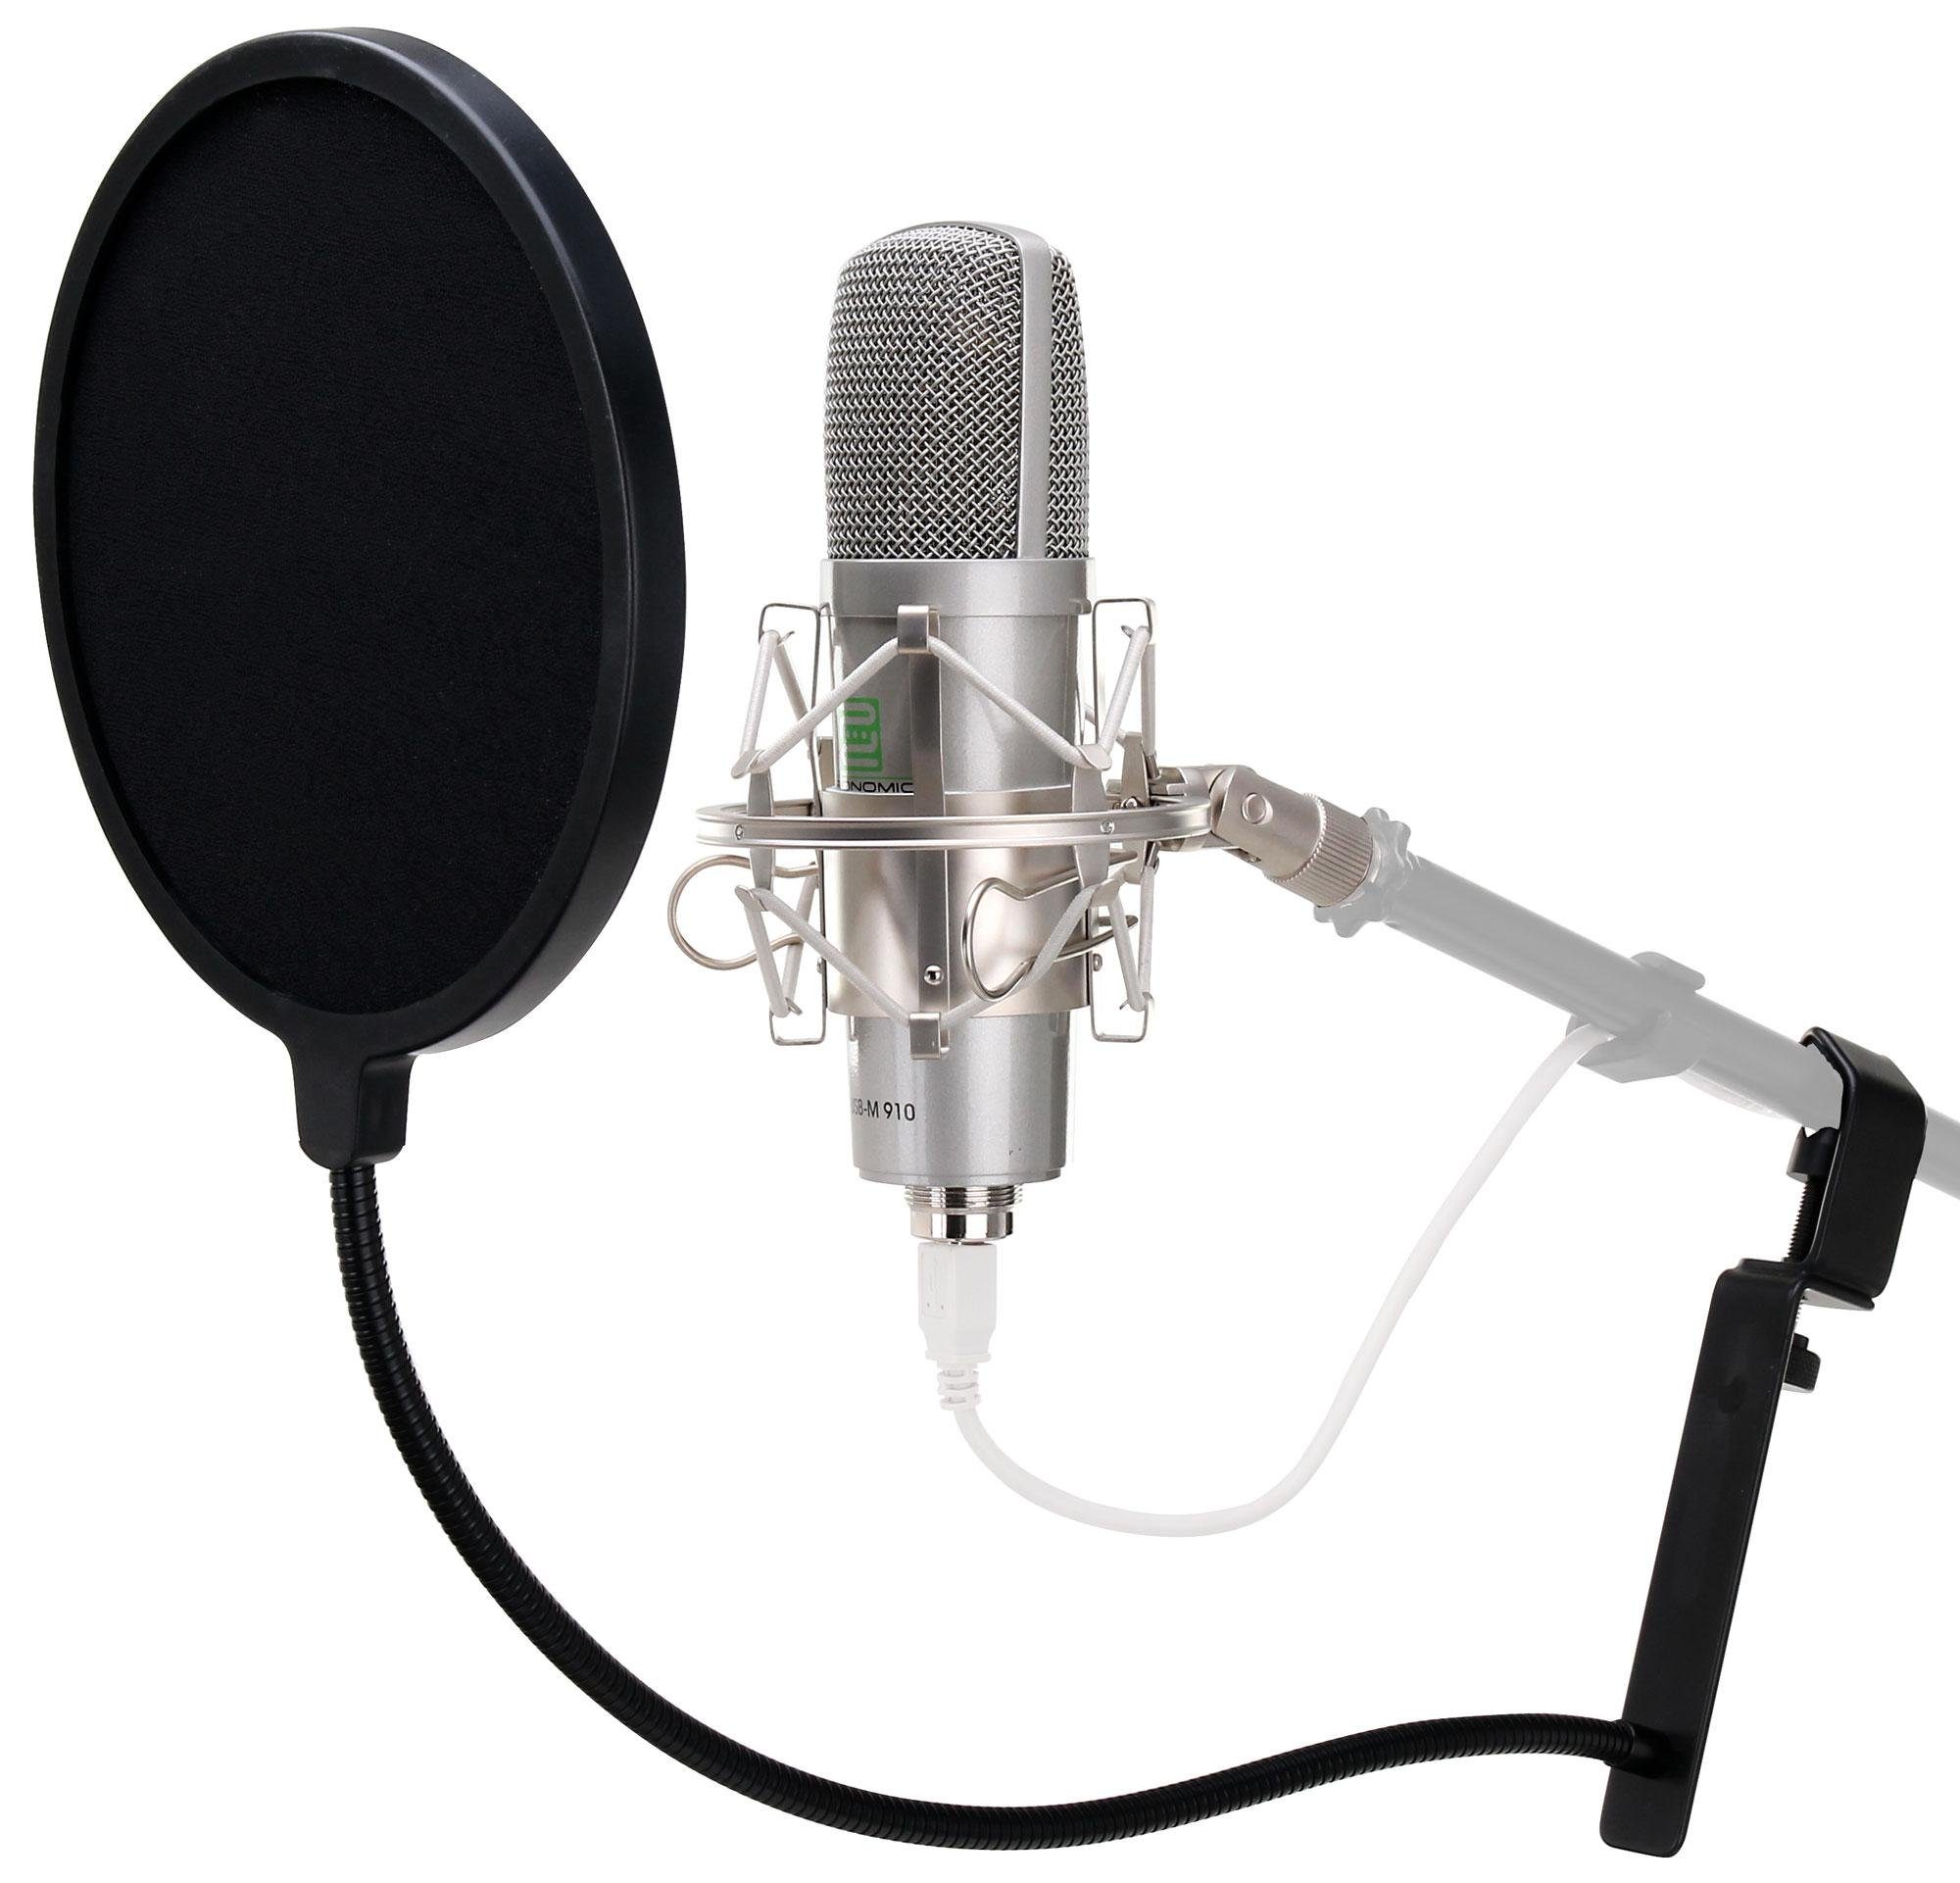 Pronomic Mikrofon USB-M 910 Podcast USB-Studiomikrofon Plug & Play  (Popschutz Set, 4-tlg), Inkl. Mikrofonspinne, Etui und 1,7 m USB-Kabel